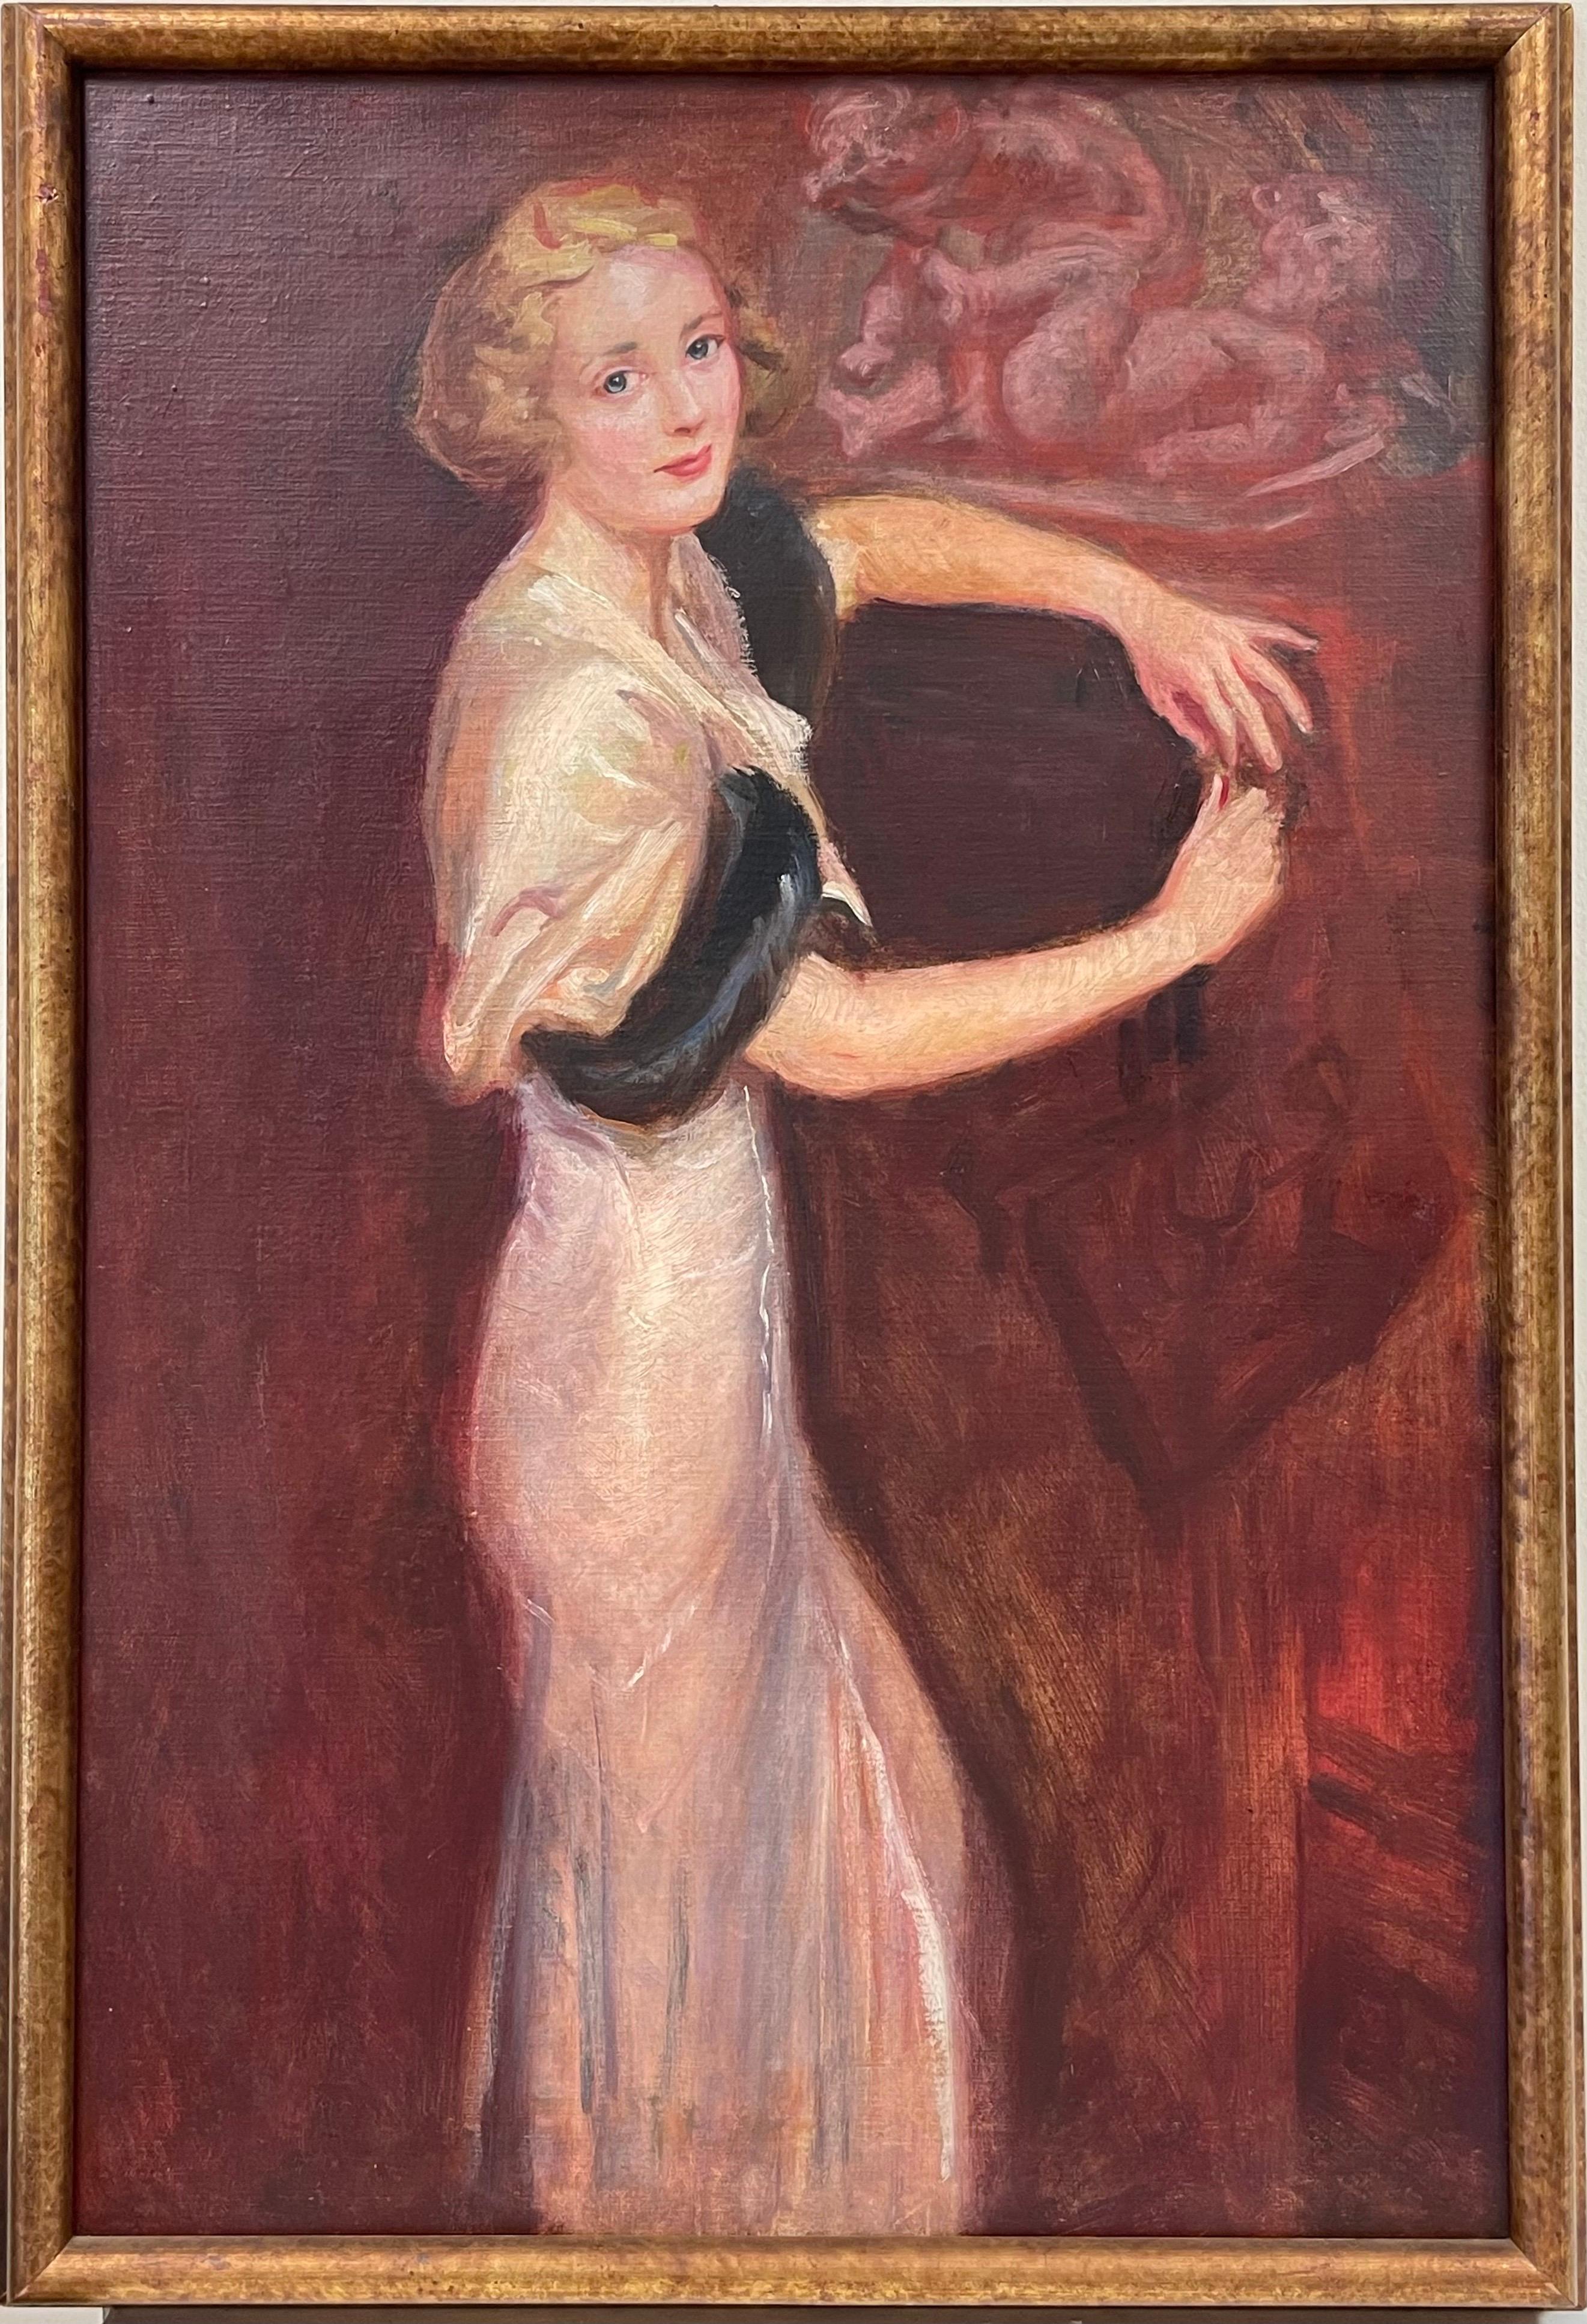 American 1930's Portrait Painting - Original Antique Portrait of Thelma Todd American Film Star - Beautiful Oil 